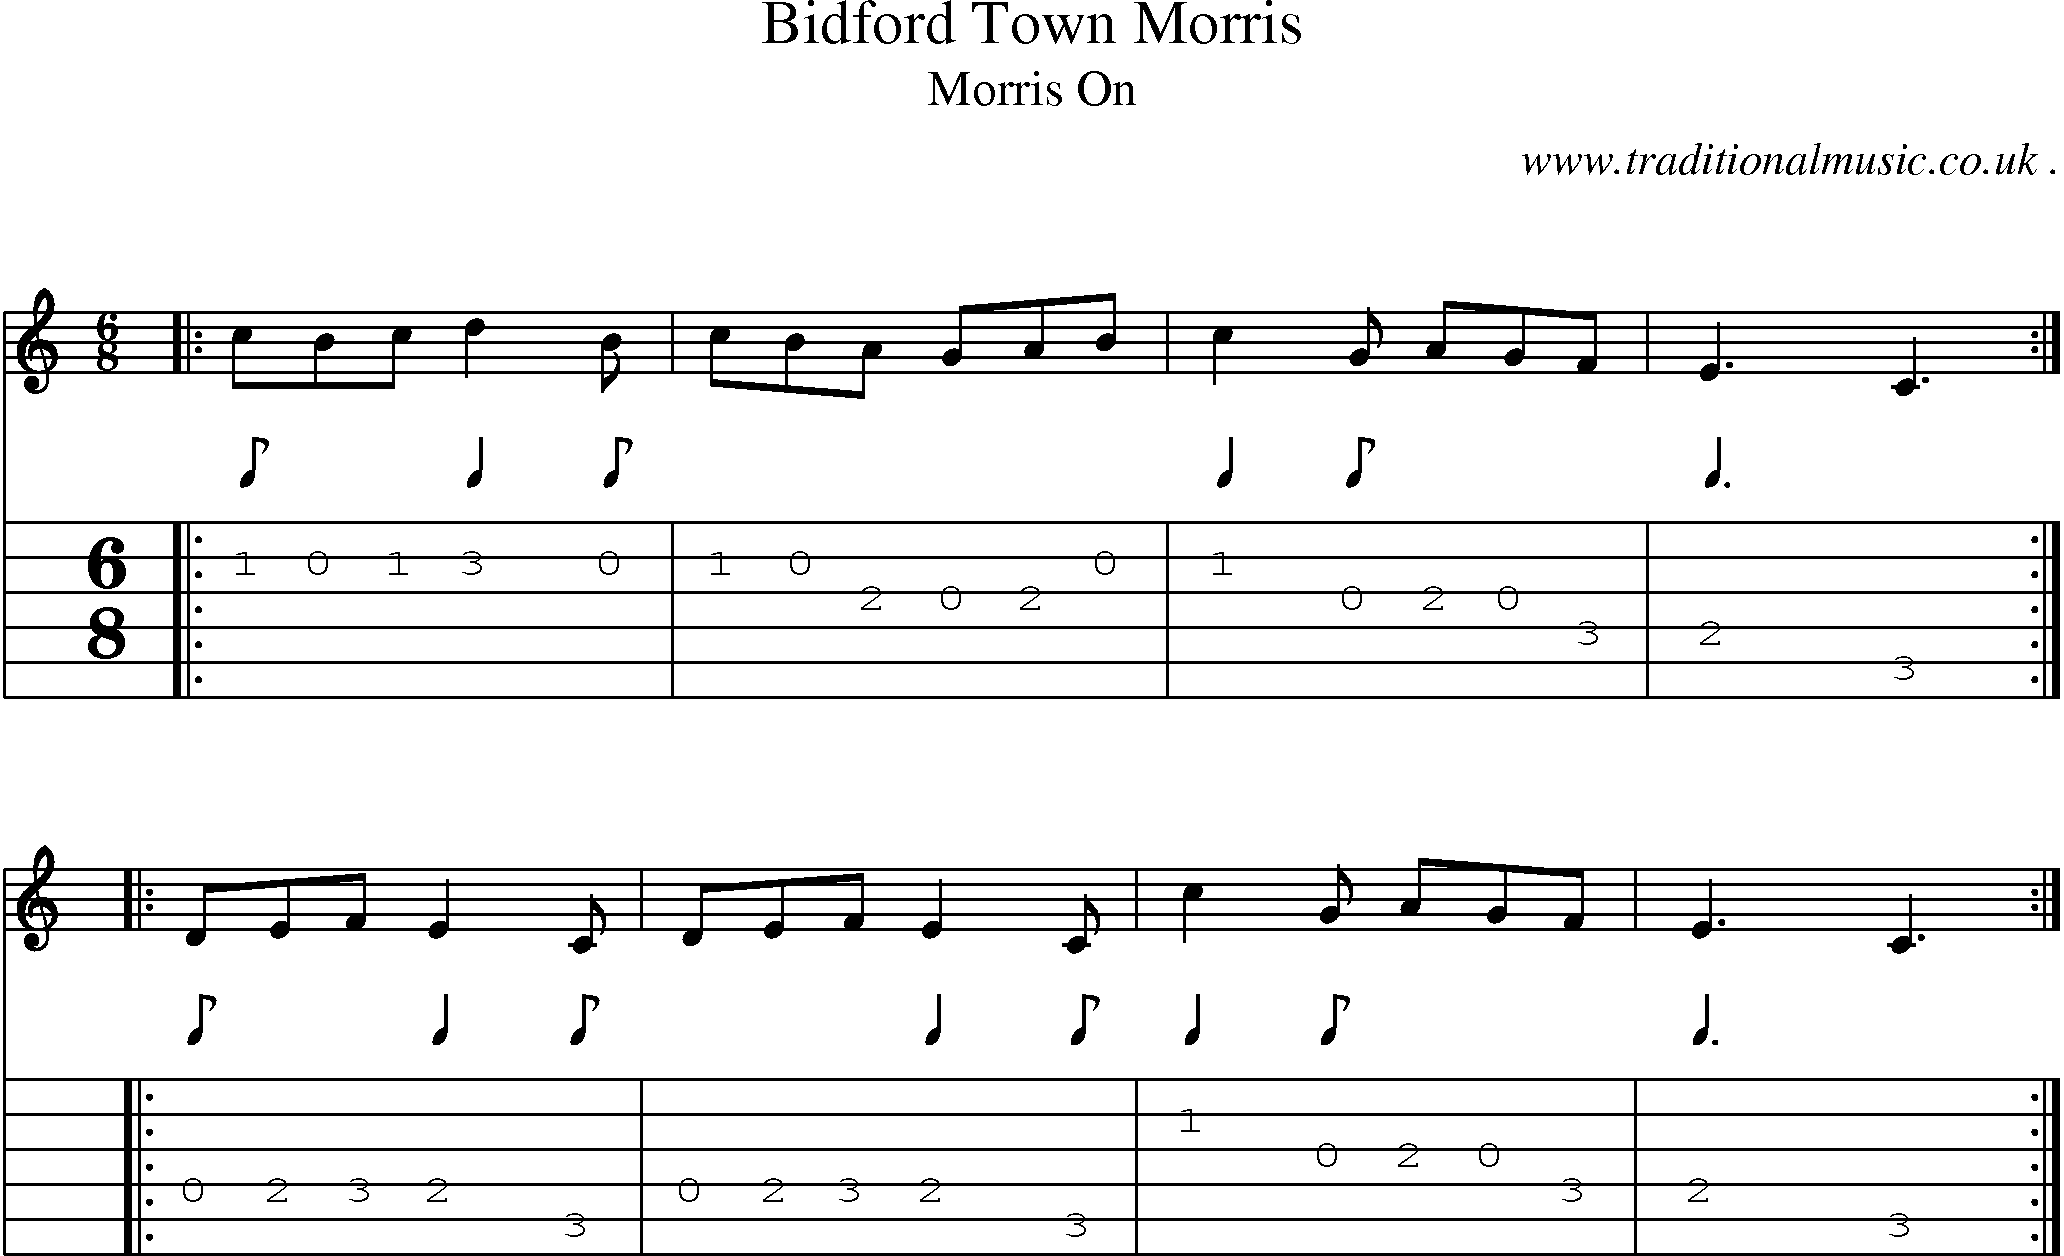 Sheet-Music and Guitar Tabs for Bidford Town Morris